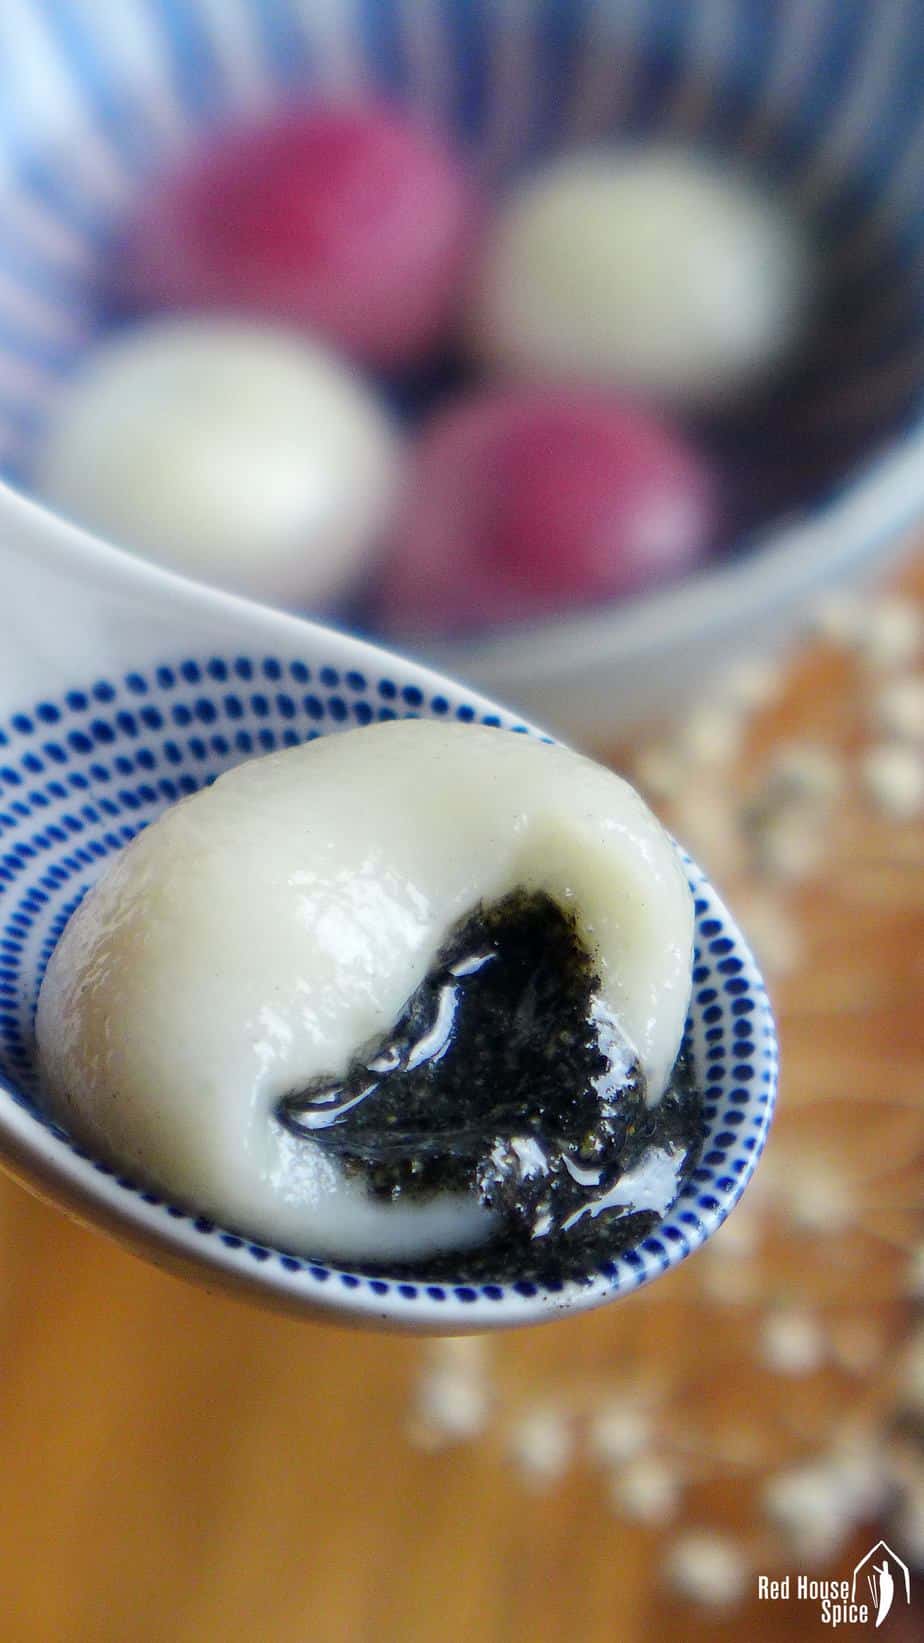 One half eaten Tang Yuan filled with black sesame paste.